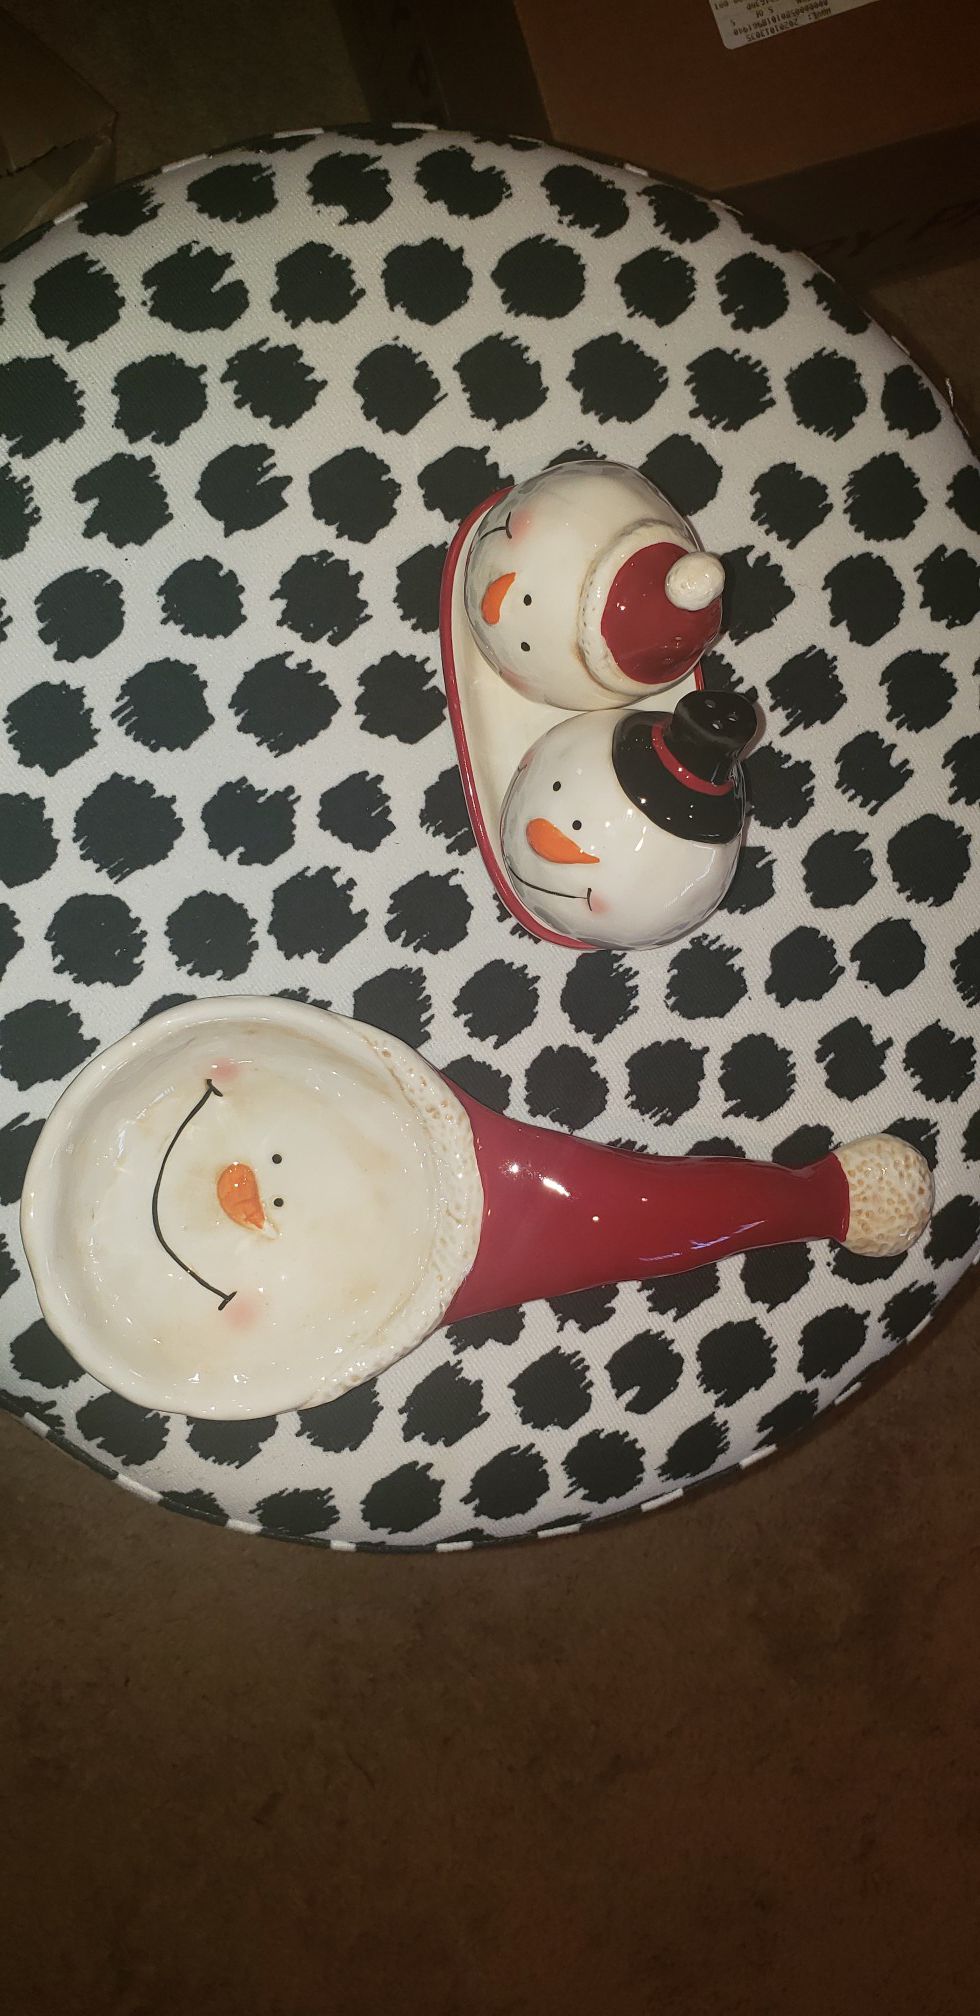 Coffee mug set (Christmas) with Cream and Sugar, Salt n pepper, spoon rest